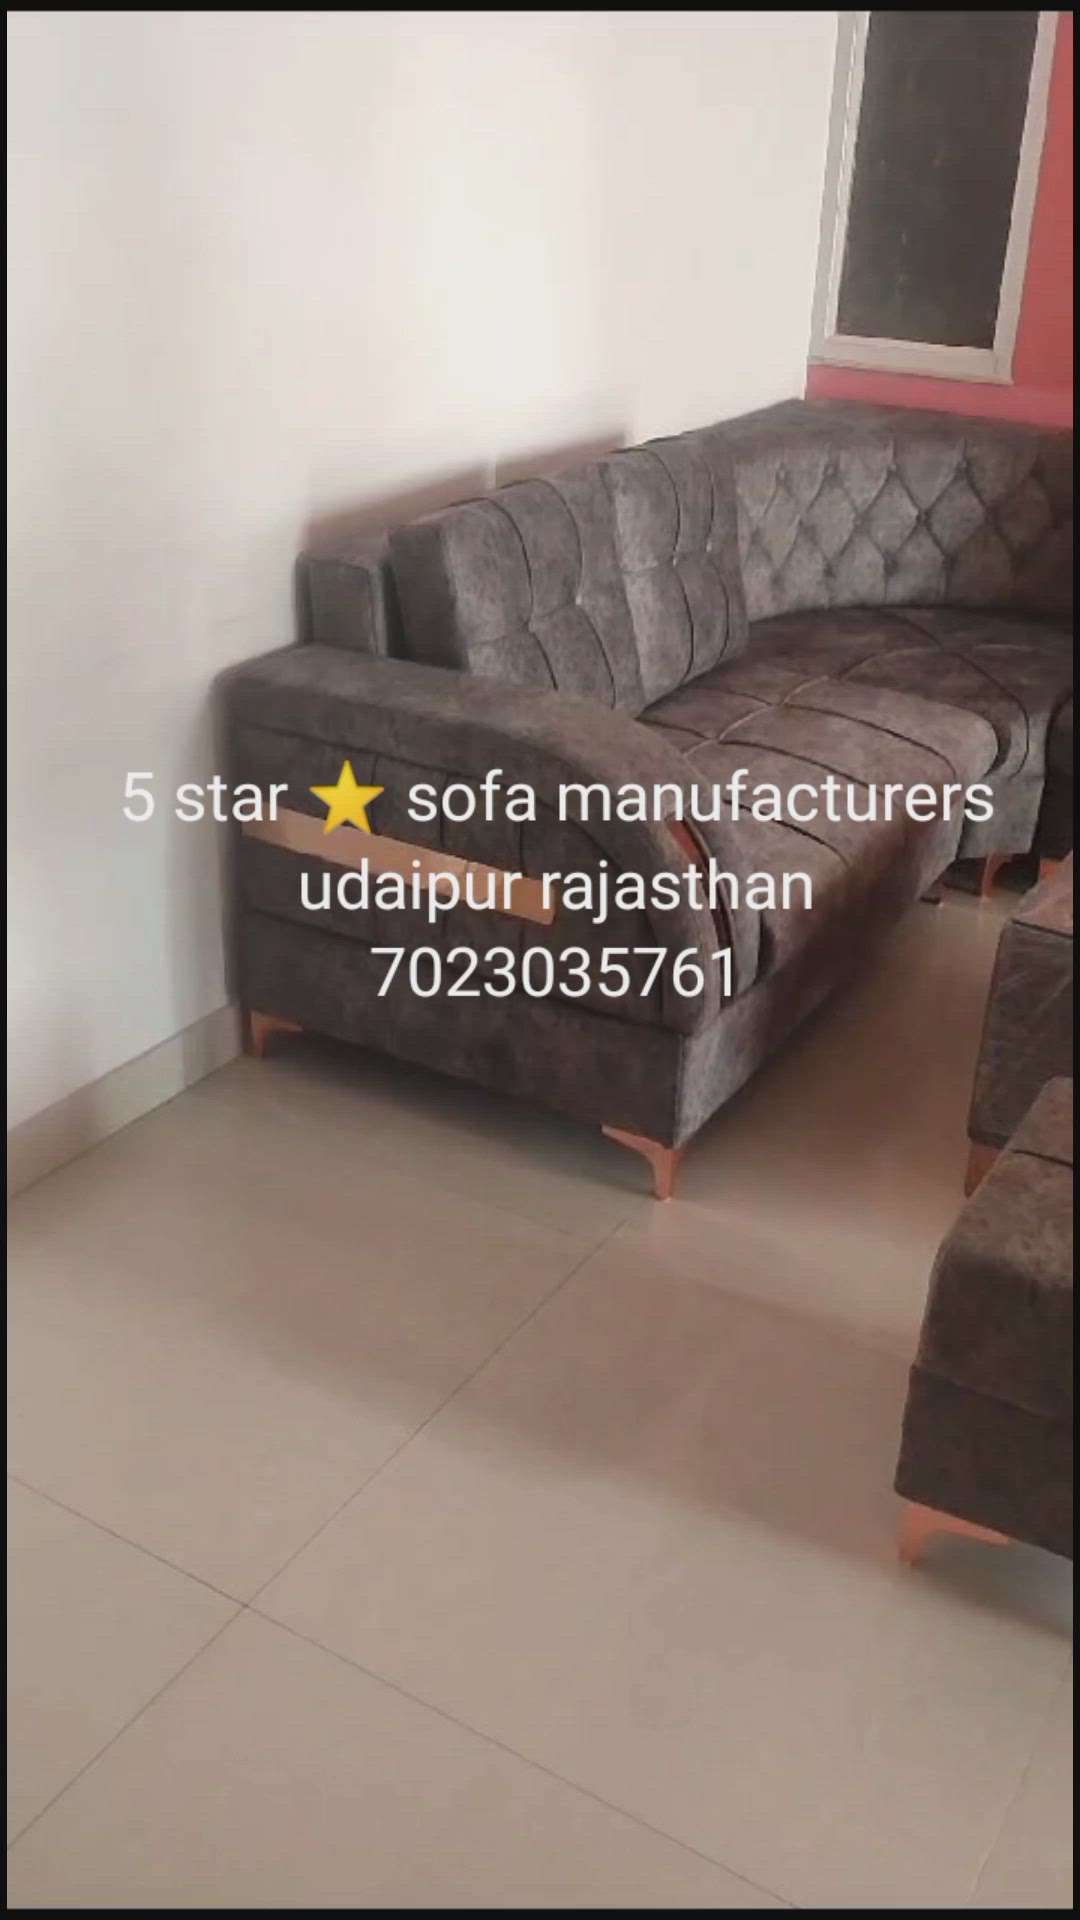 #Sofas #LivingRoomSofa #Sofas #furniture